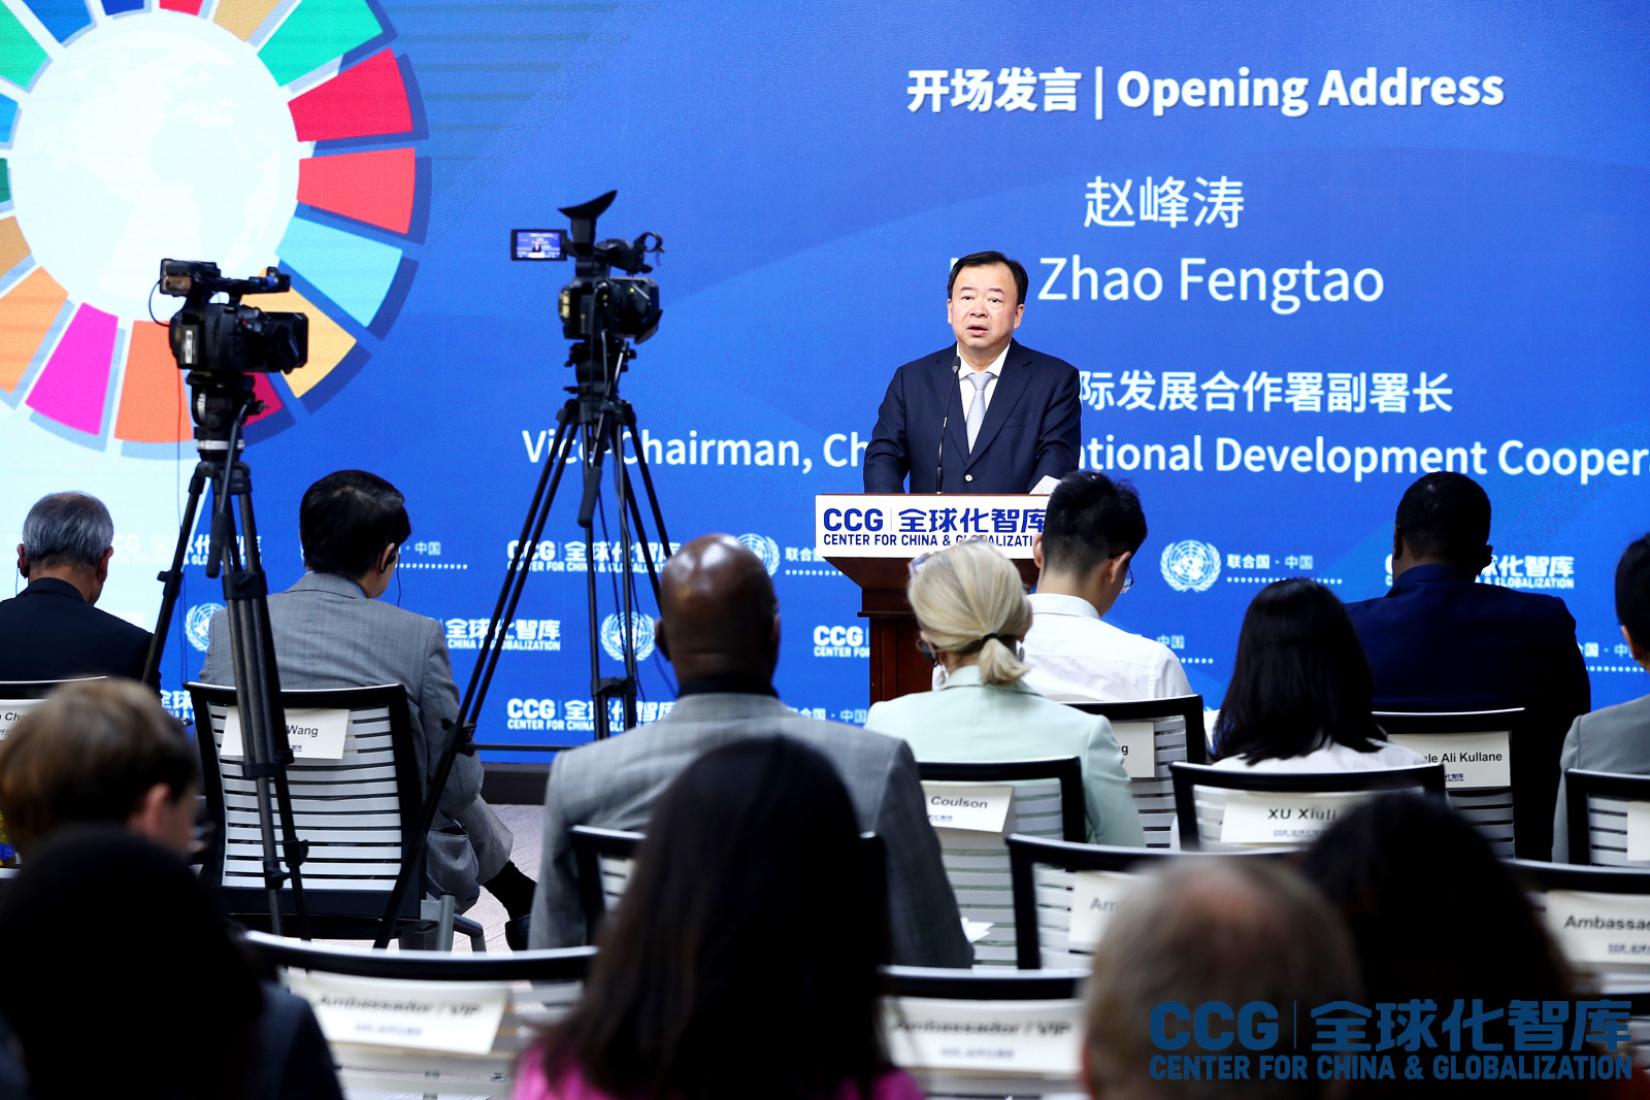 Mr. Zhao Fengtao, Vice Chairman, China International Development Cooperation Agency